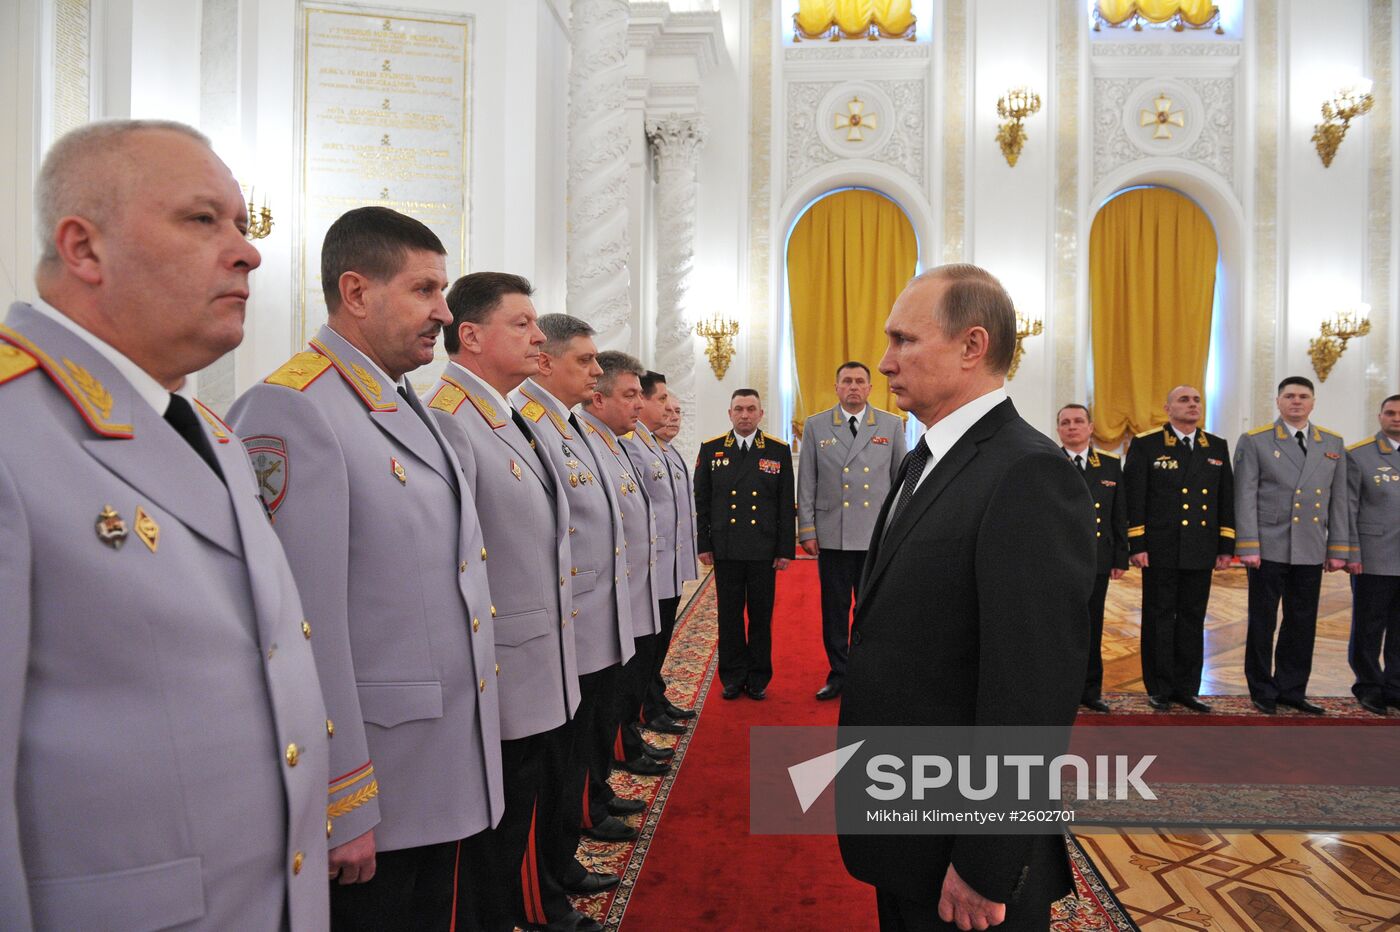 Russian President Vladimir Putin meets with senior officers and prosecutors in the Kremlin